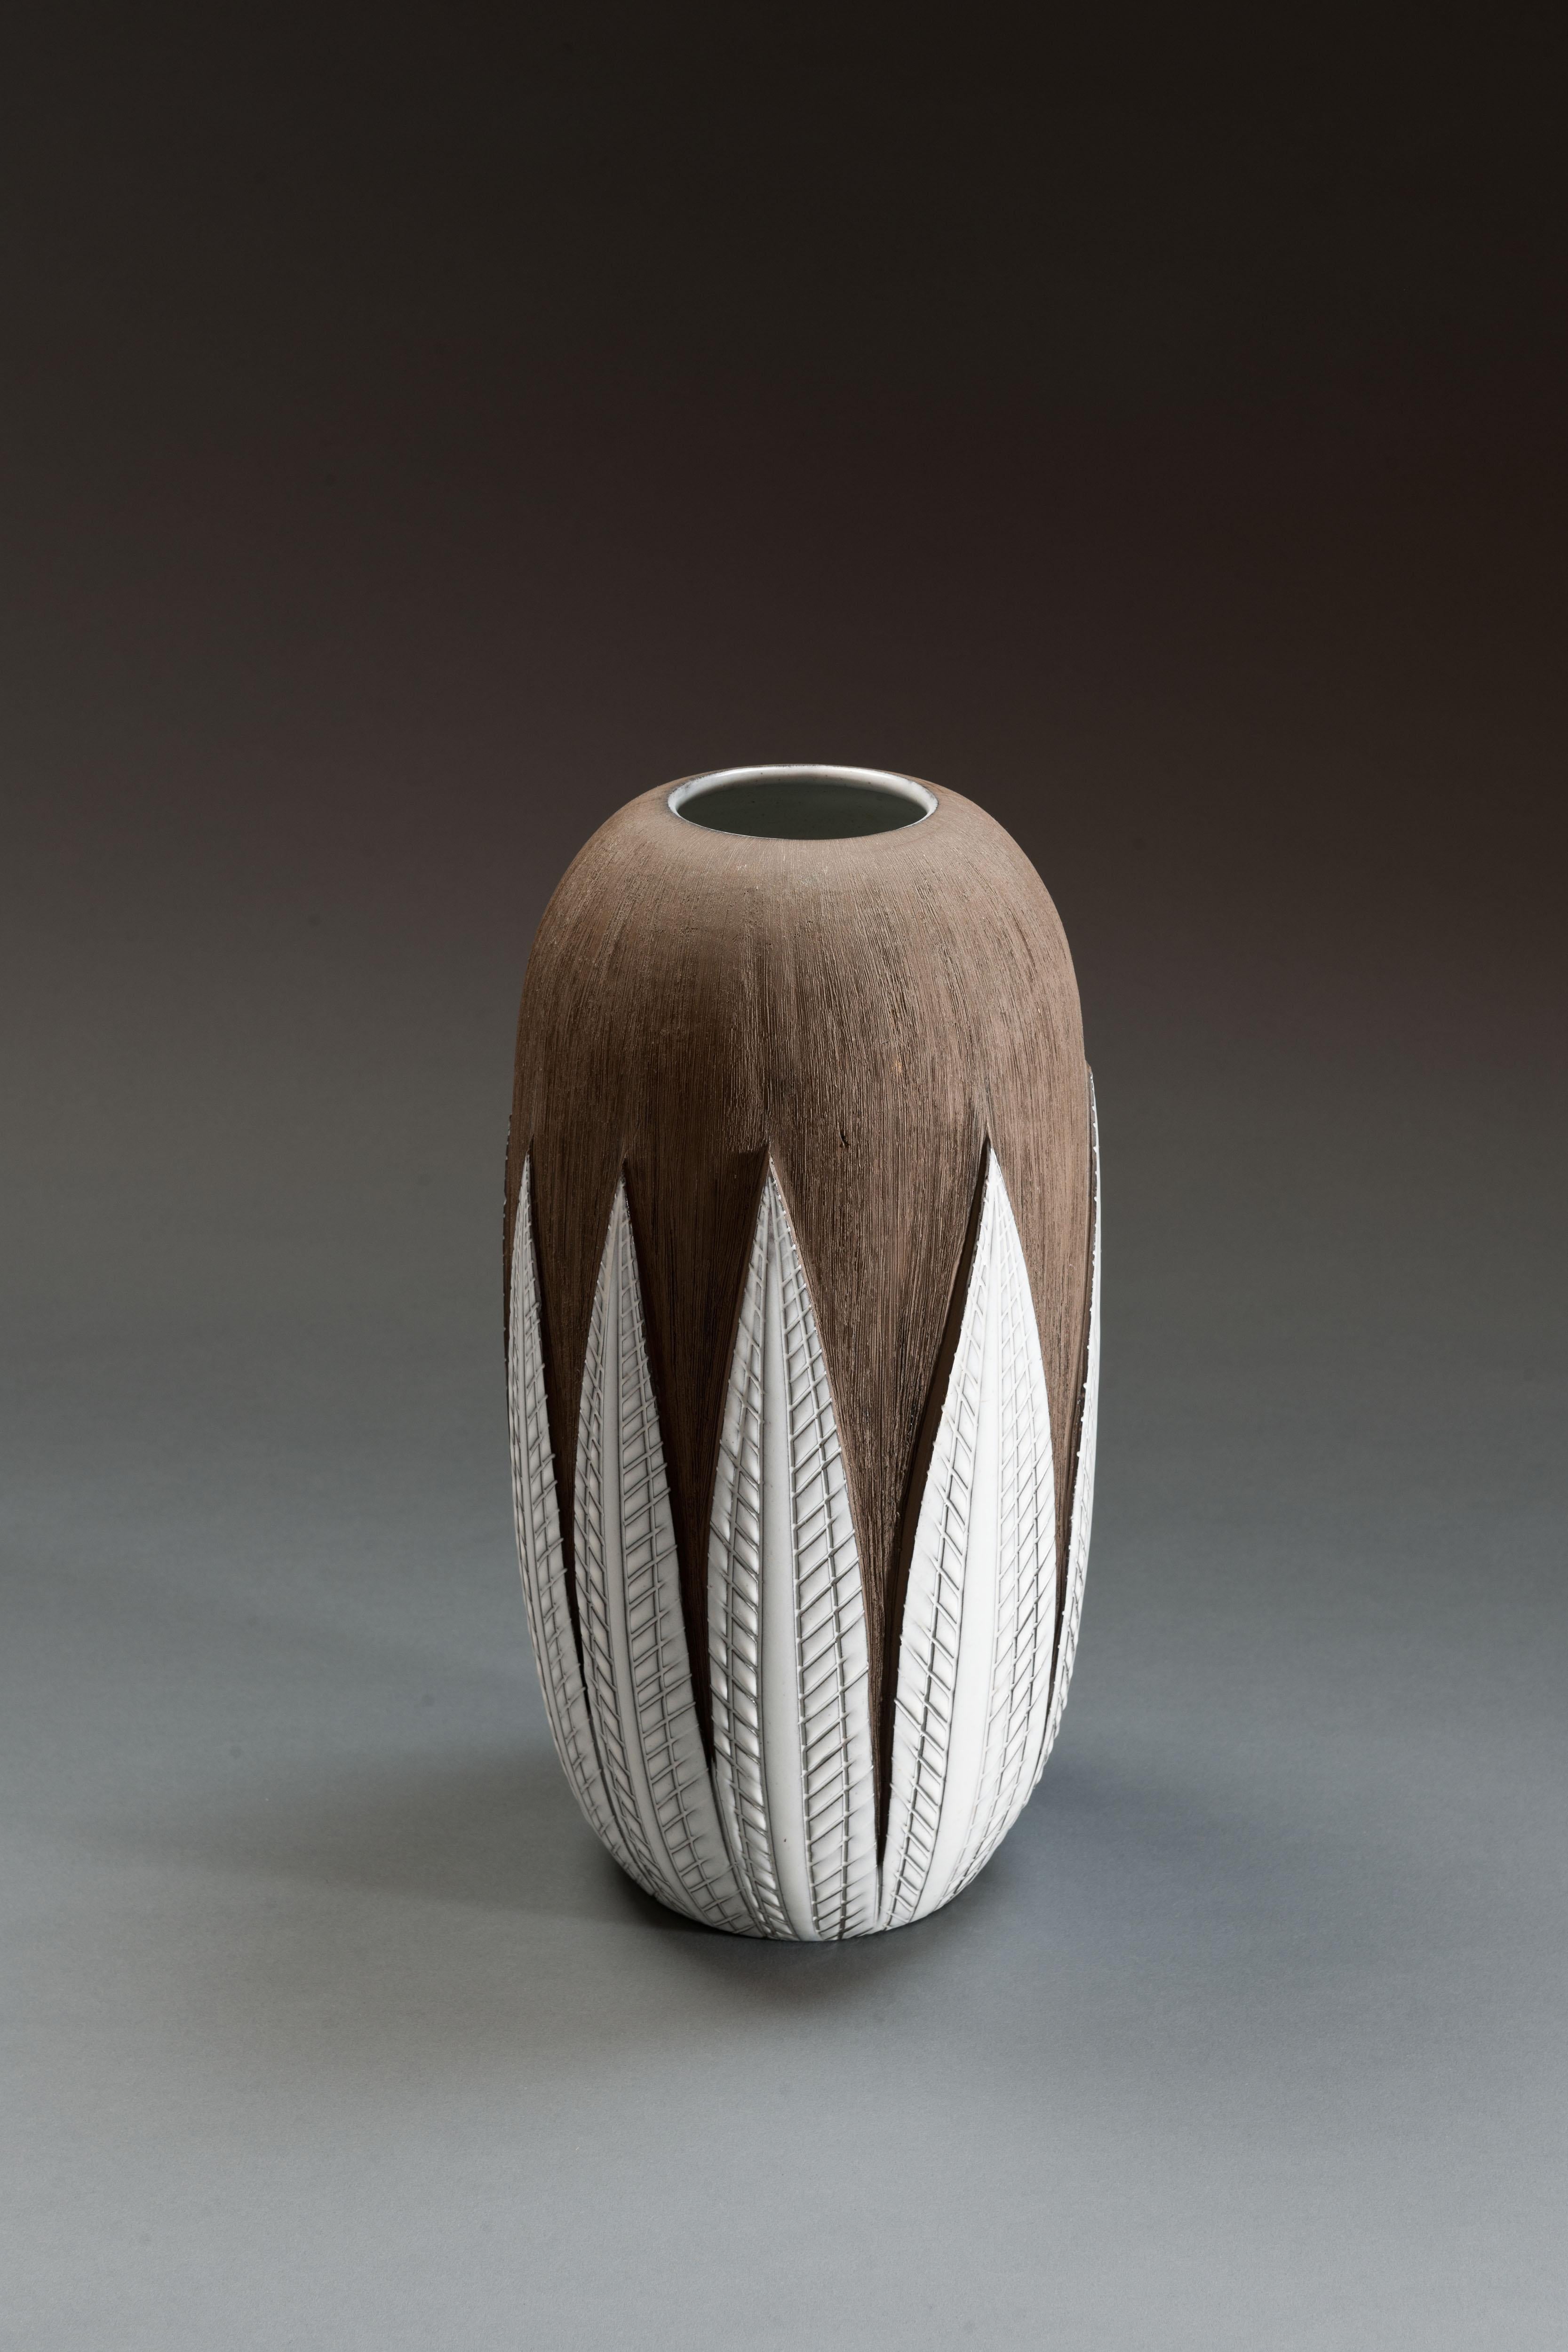 Anna-Lisa Thomson Ceramic 'Paprika' Vases (3) by Upsala Ekeby For Sale 1